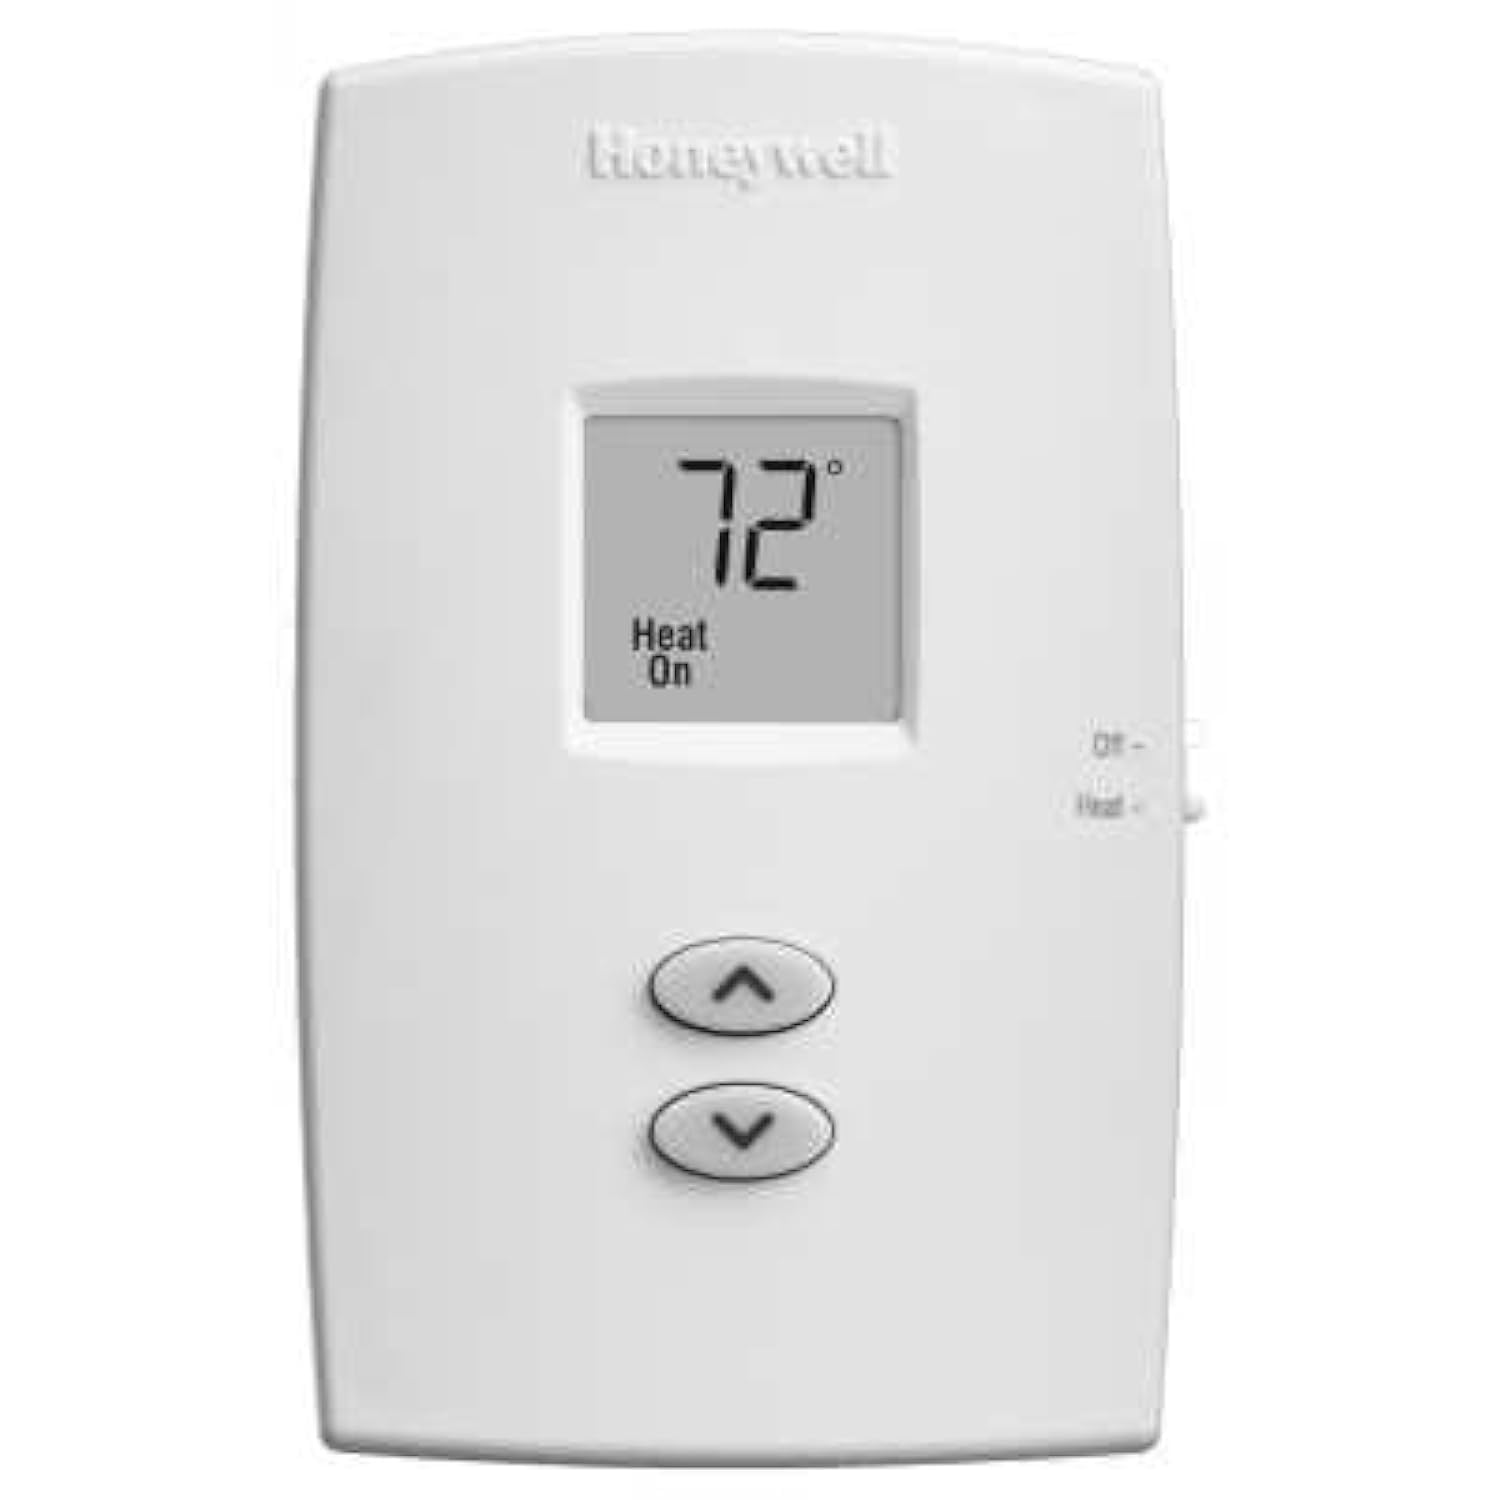 Honeywell Pro 1000 Thermostat Troubleshooting